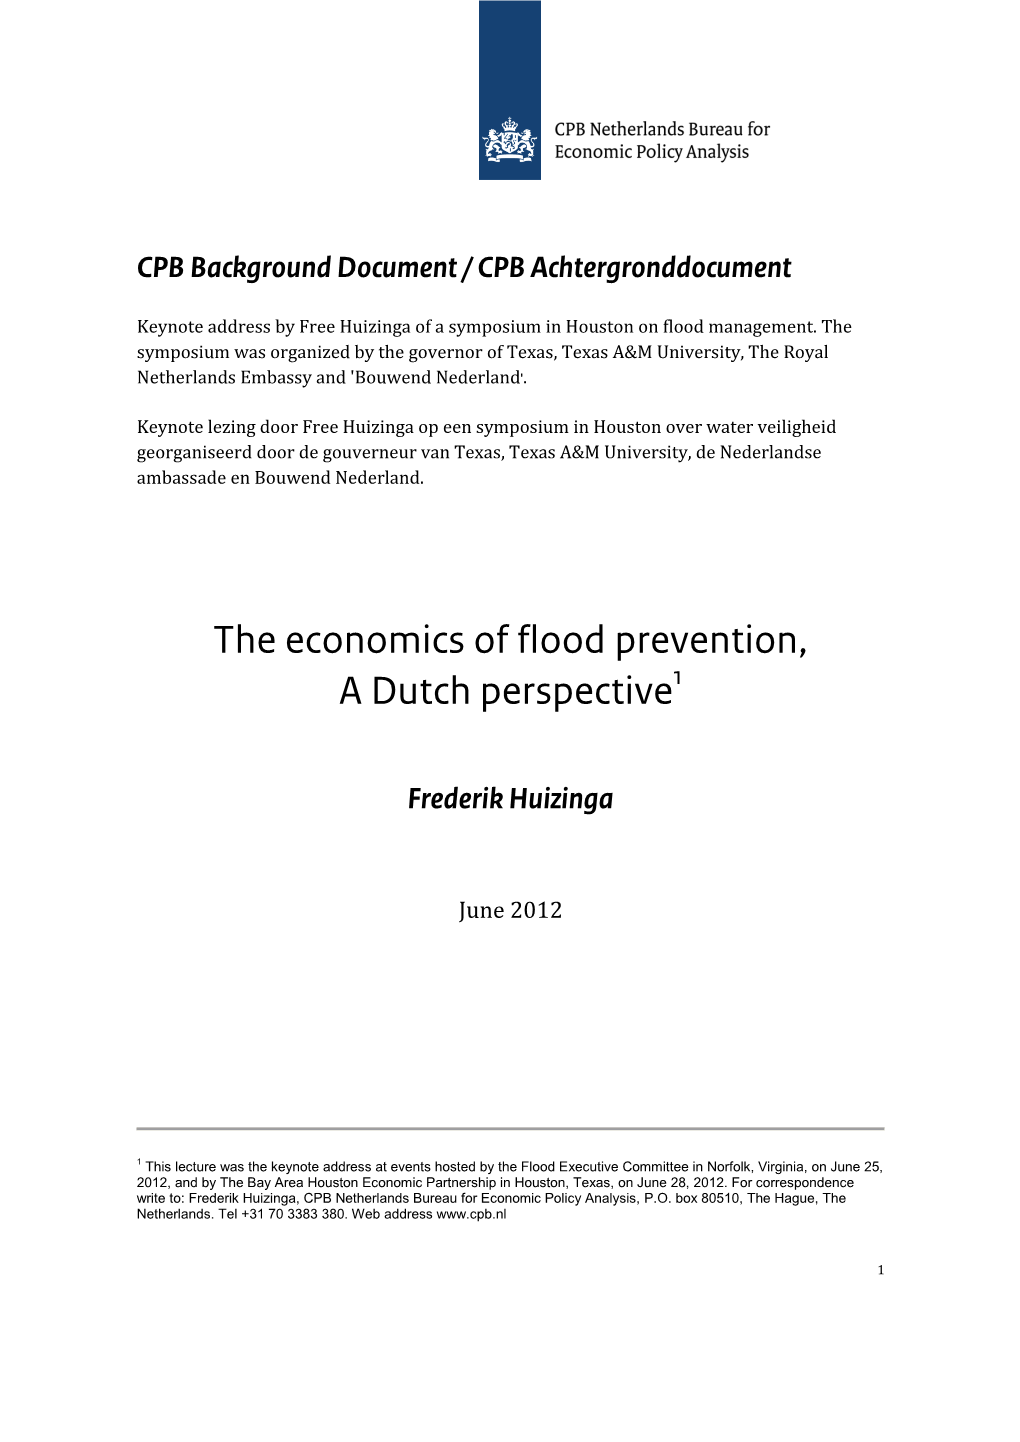 The Economics of Flood Prevention, a Dutch Perspective1